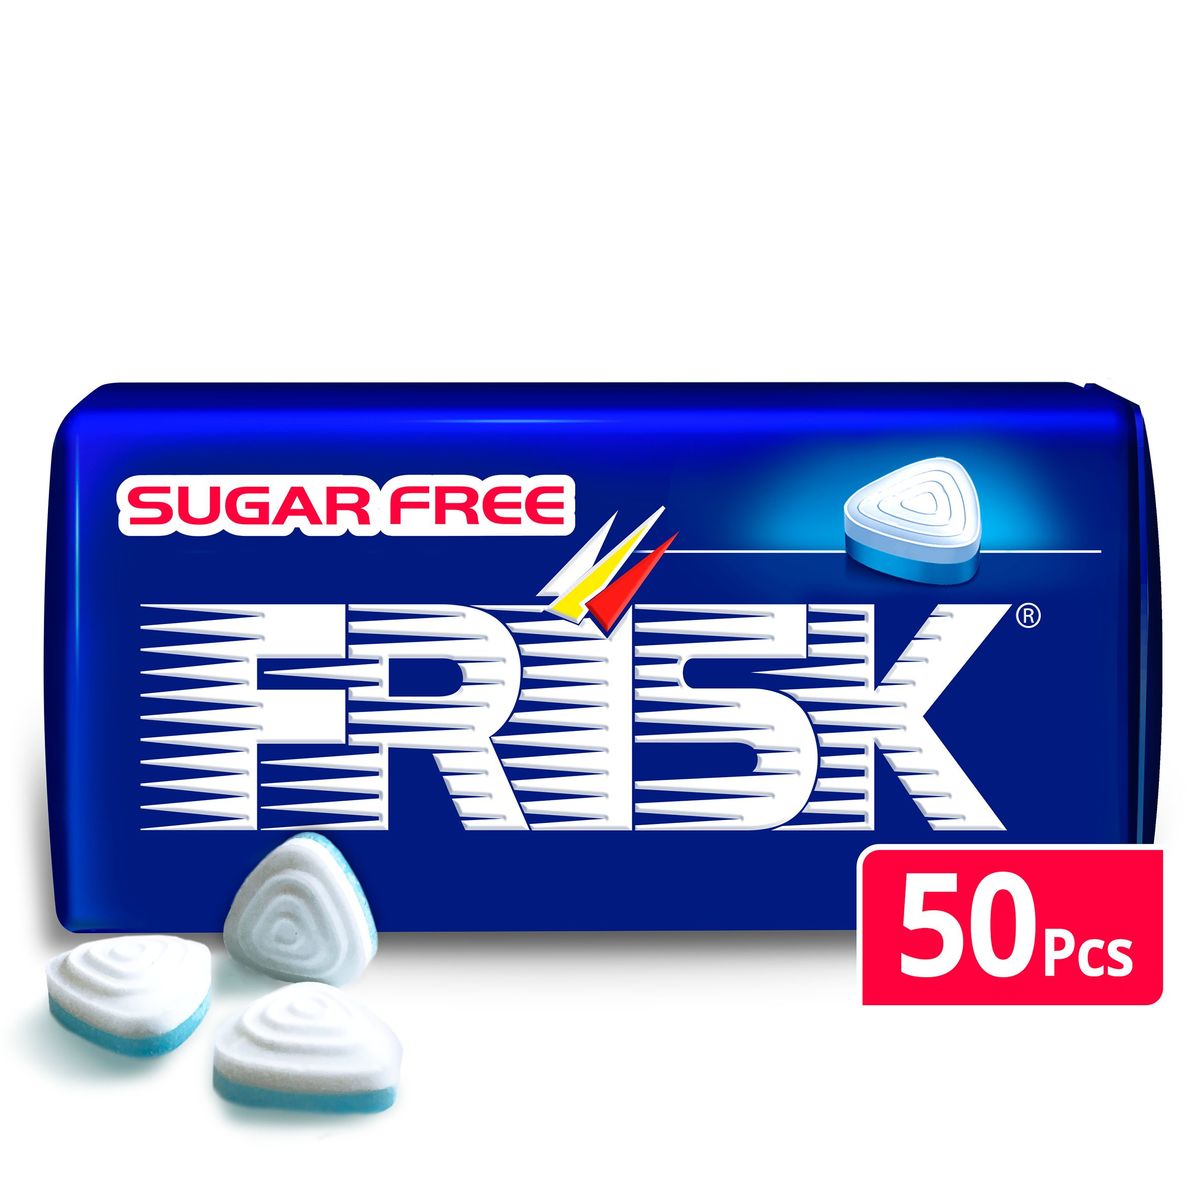 Peppermint Frisk XL - 150 pastille